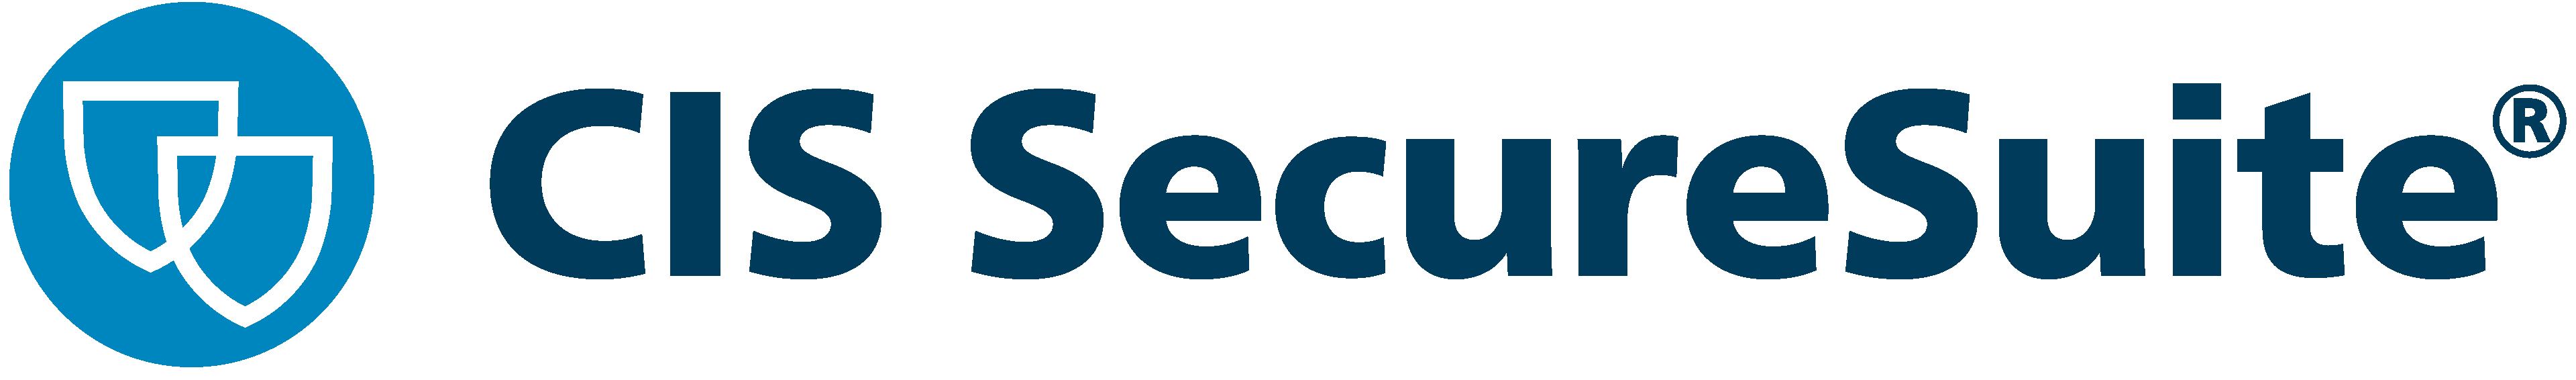 CIS SecureSuite logo